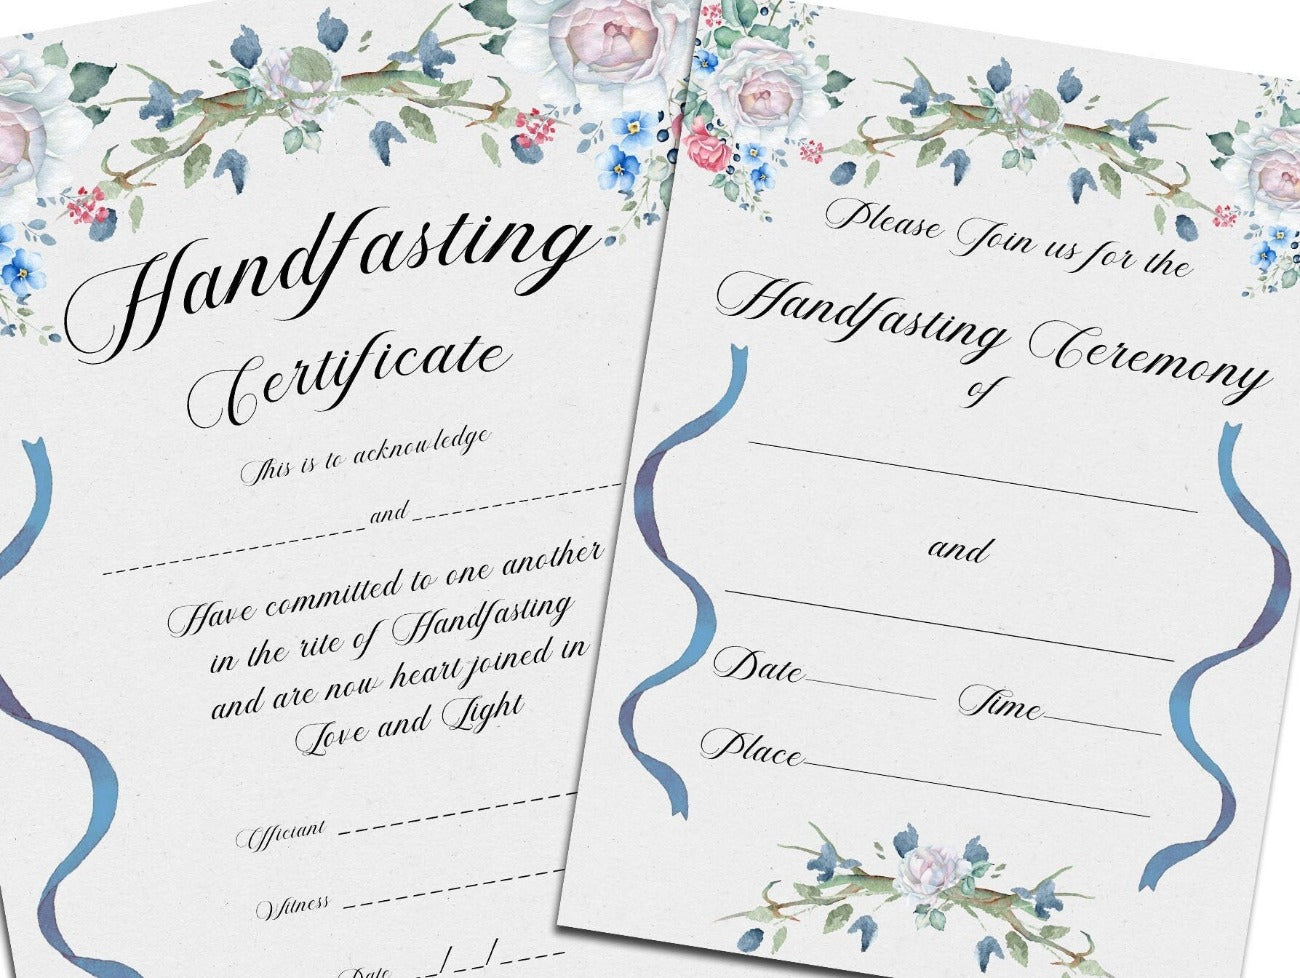 ELEGANT HANDFASTING Certificate and Invitation, Printable Instant Download- Morgana Magick Spell